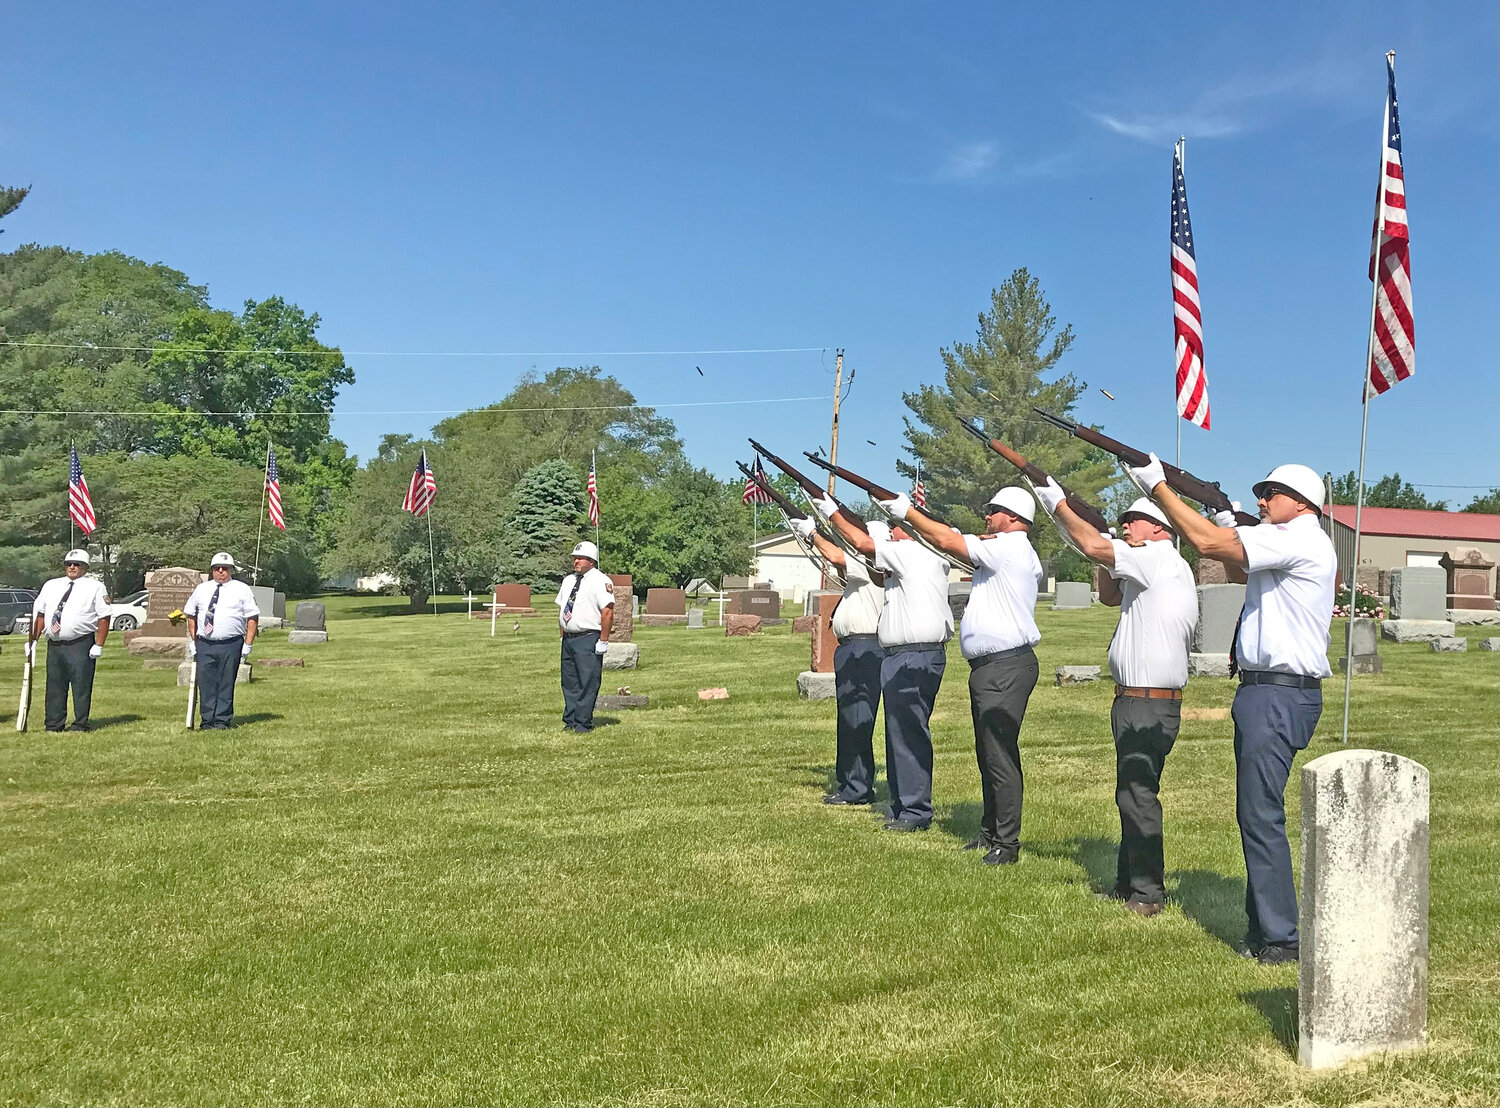 21-Gun Salute by VFW members in Riverside.